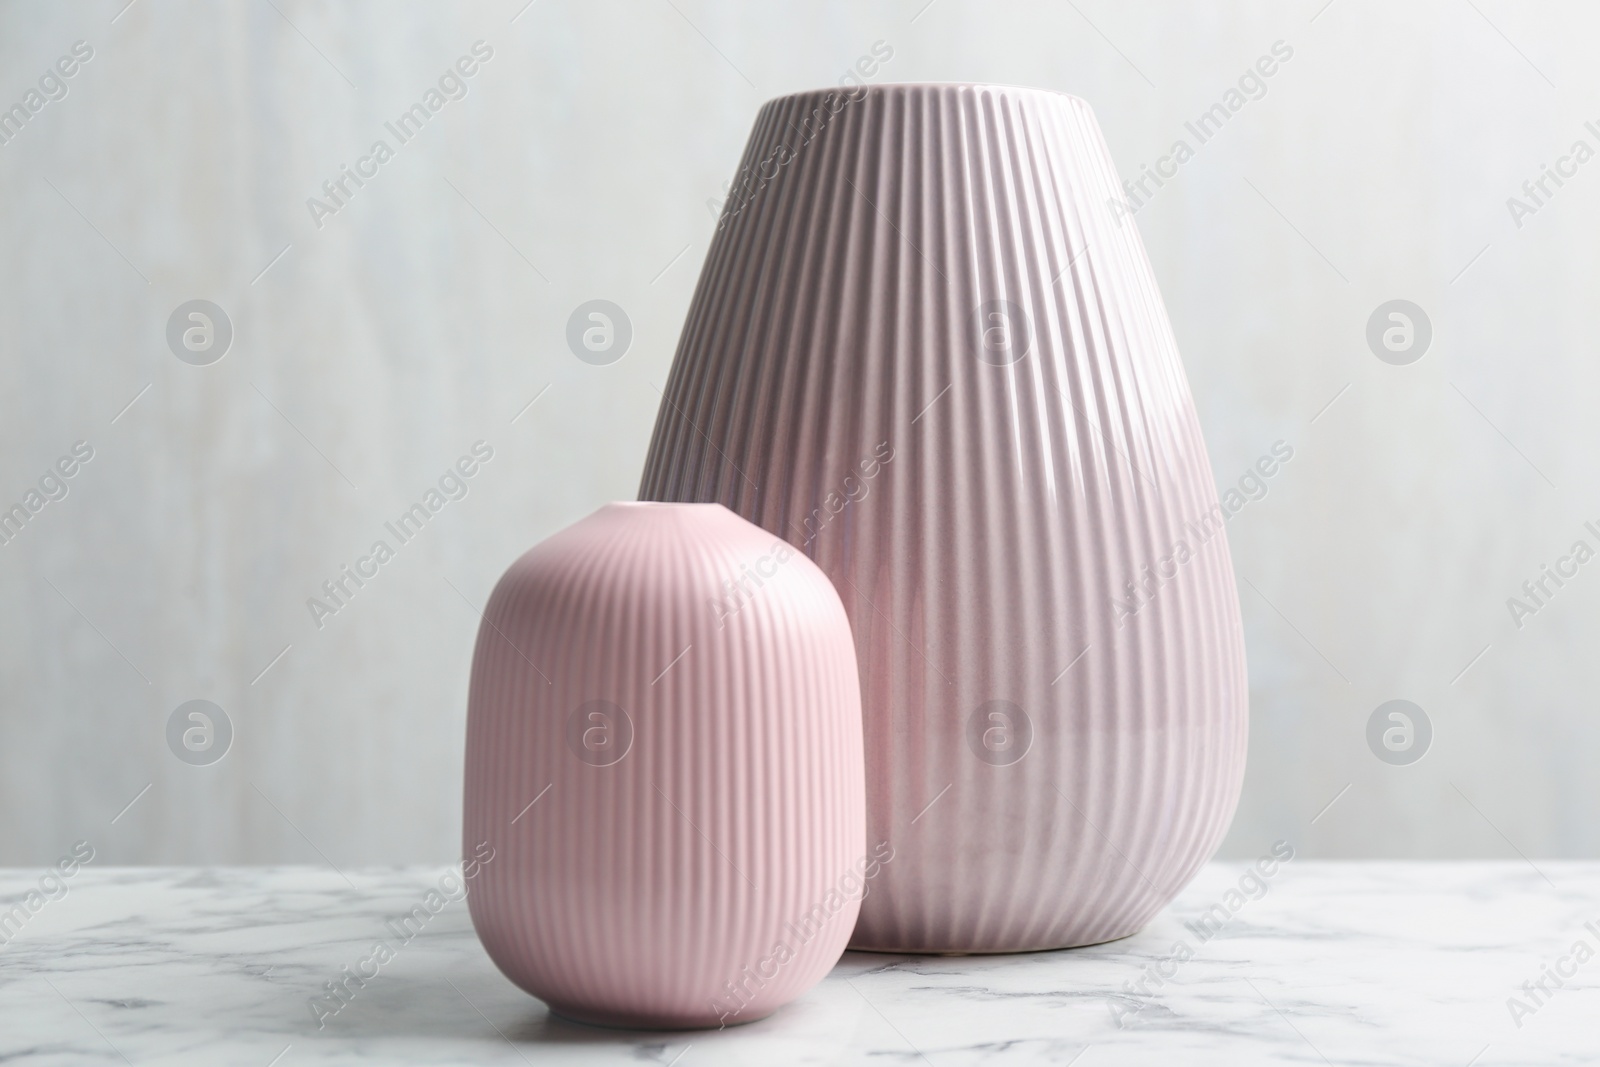 Photo of Stylish pink ceramic vases on white marble table